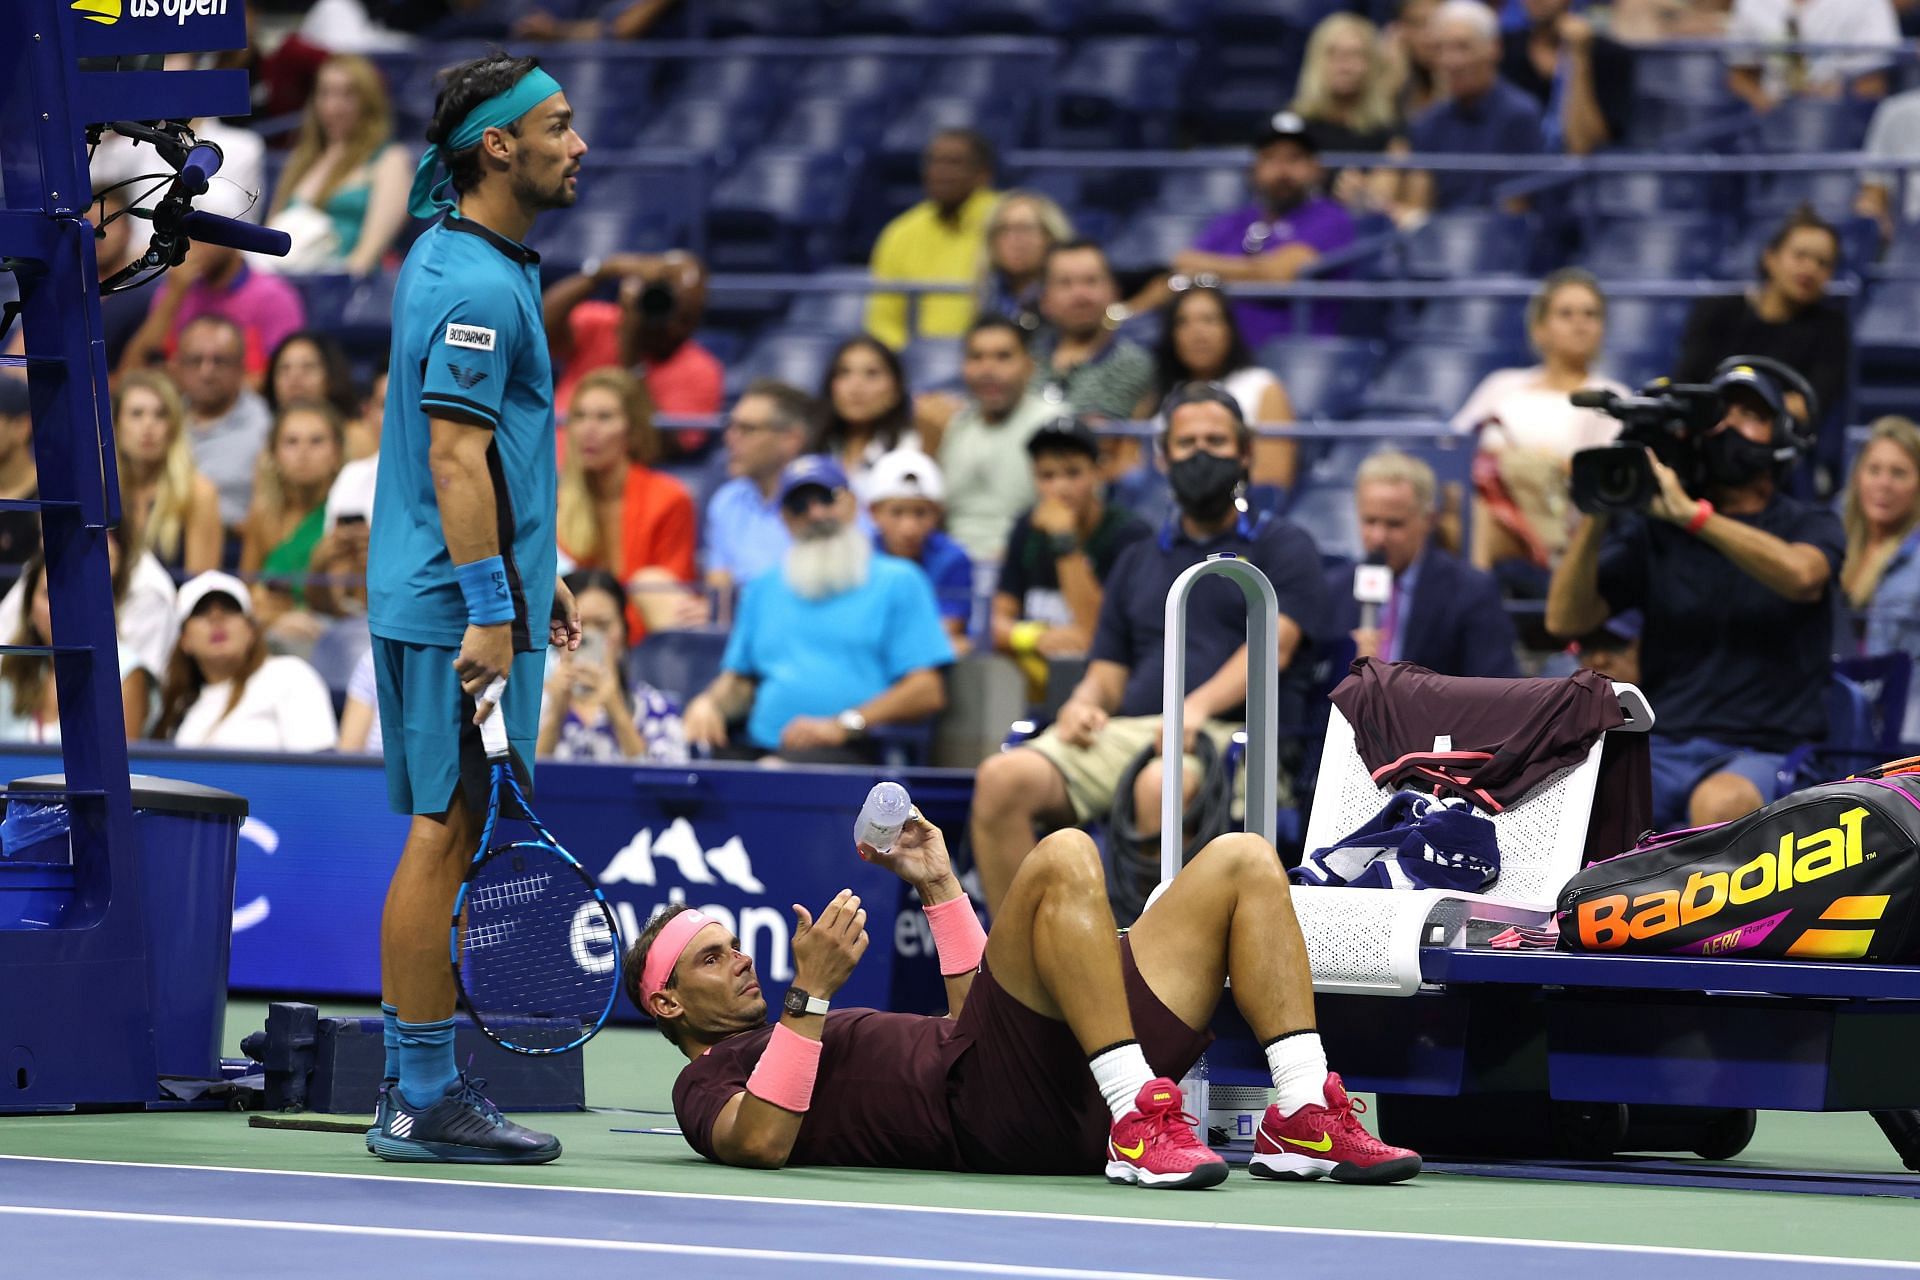 Rafael Nadal accidentally hurt himself during his second-round match against Fabio Fognini